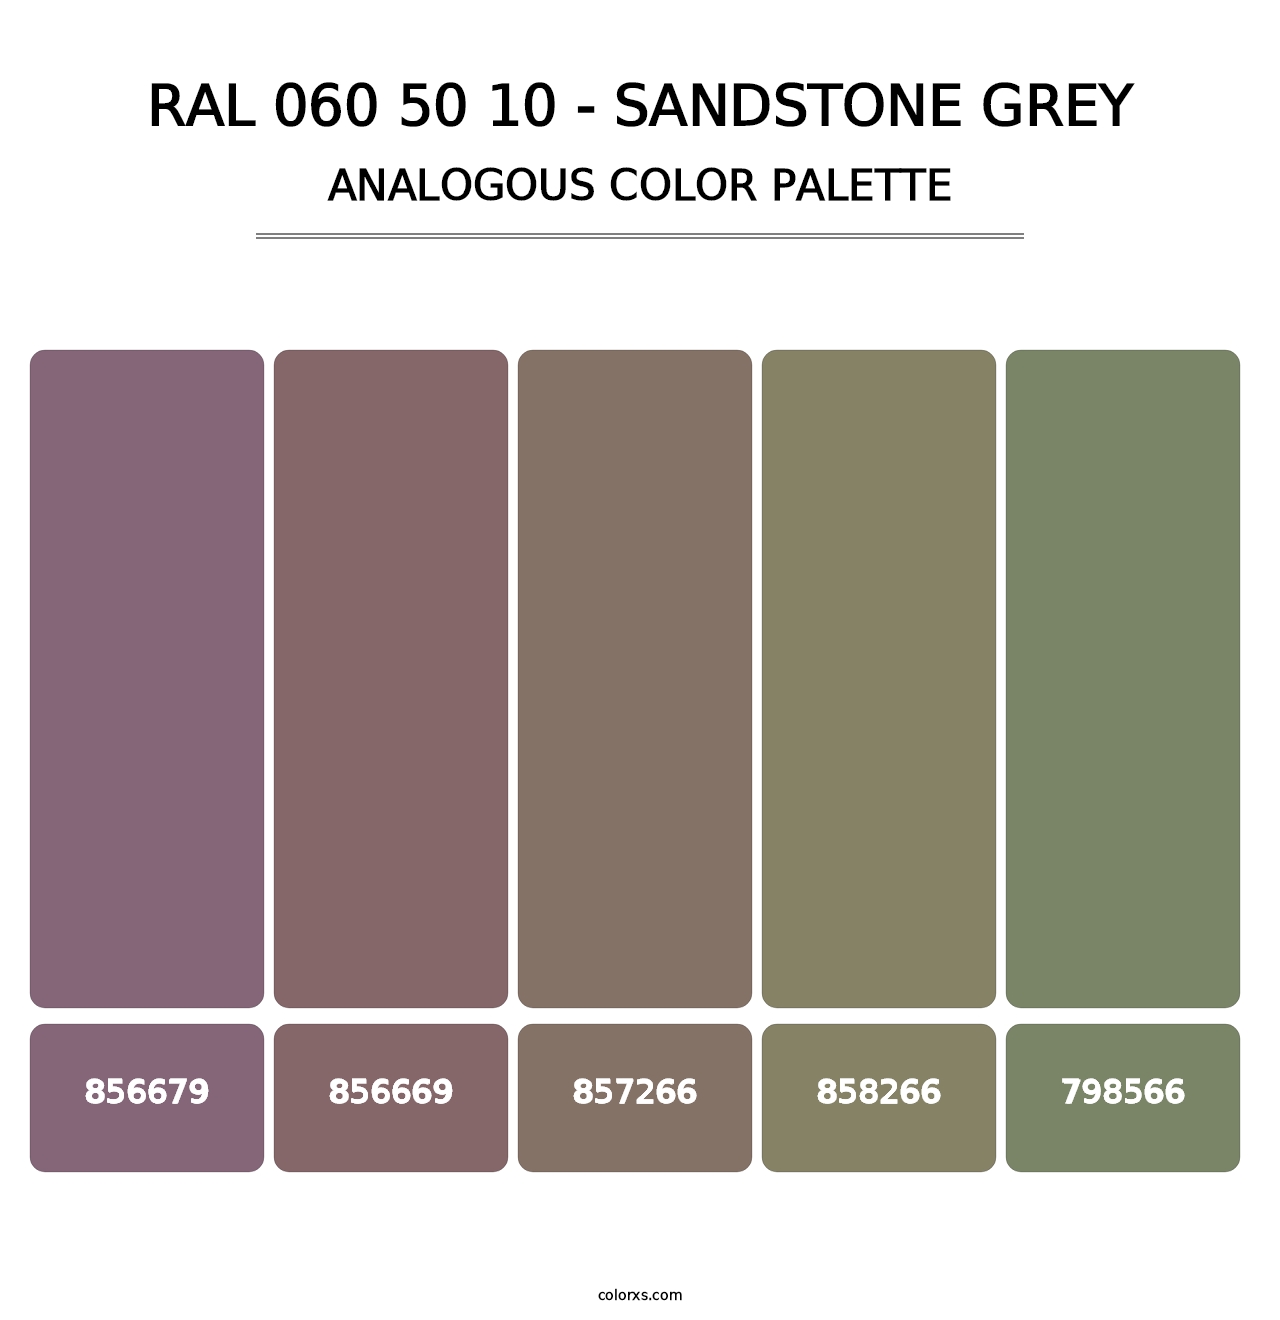 RAL 060 50 10 - Sandstone Grey - Analogous Color Palette